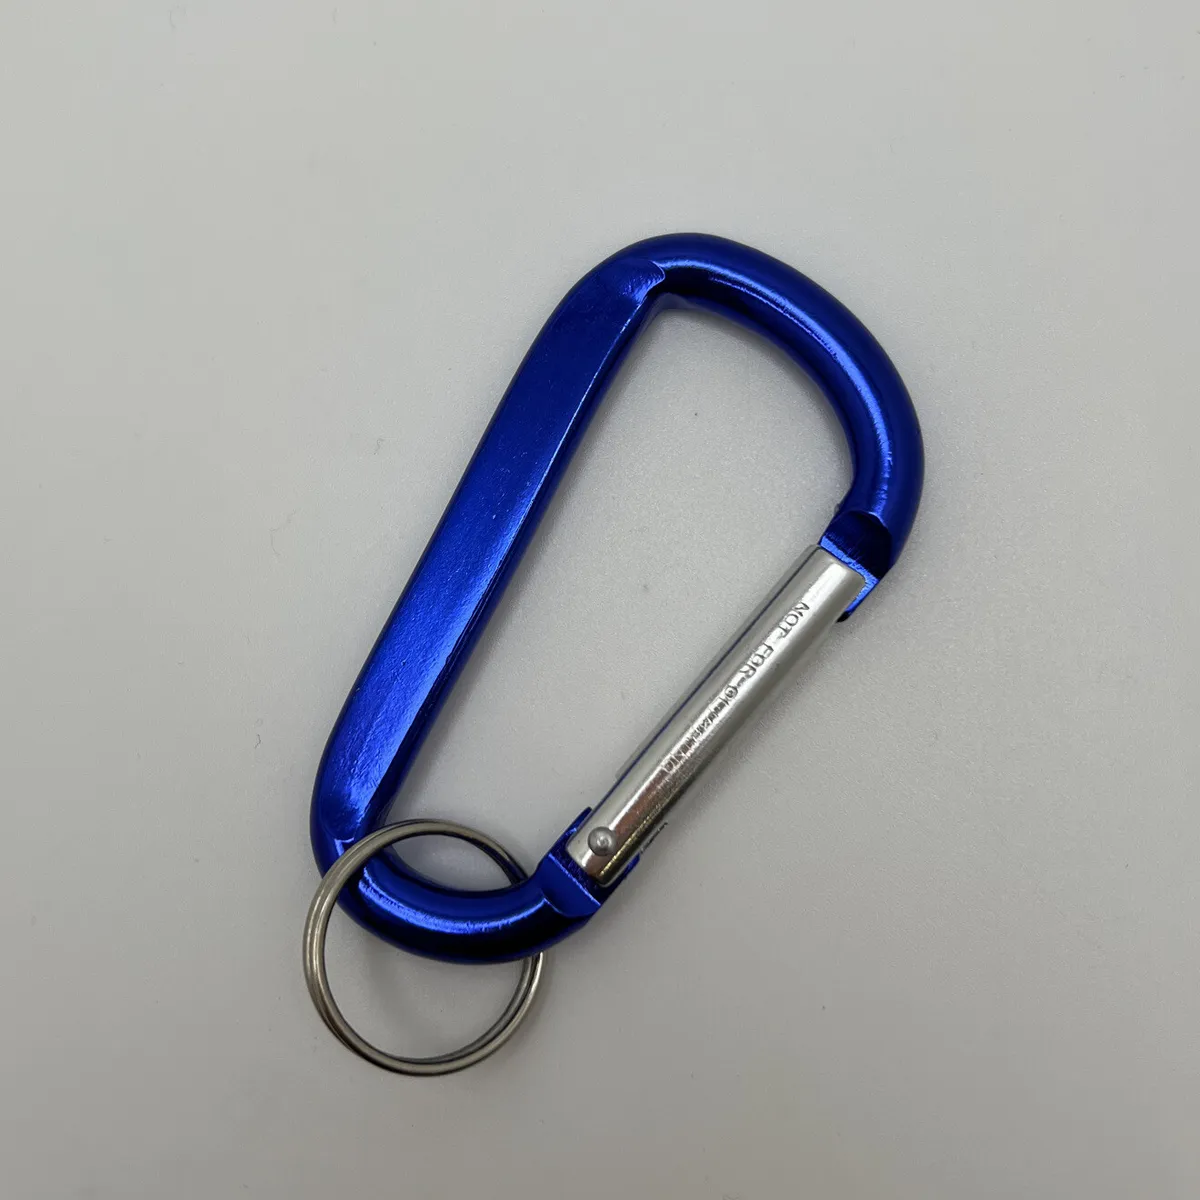 BLUE CARABINER 3 Aluminum D-Ring KEYCHAIN Spring Clip Snap Hook KEY RING  2pc